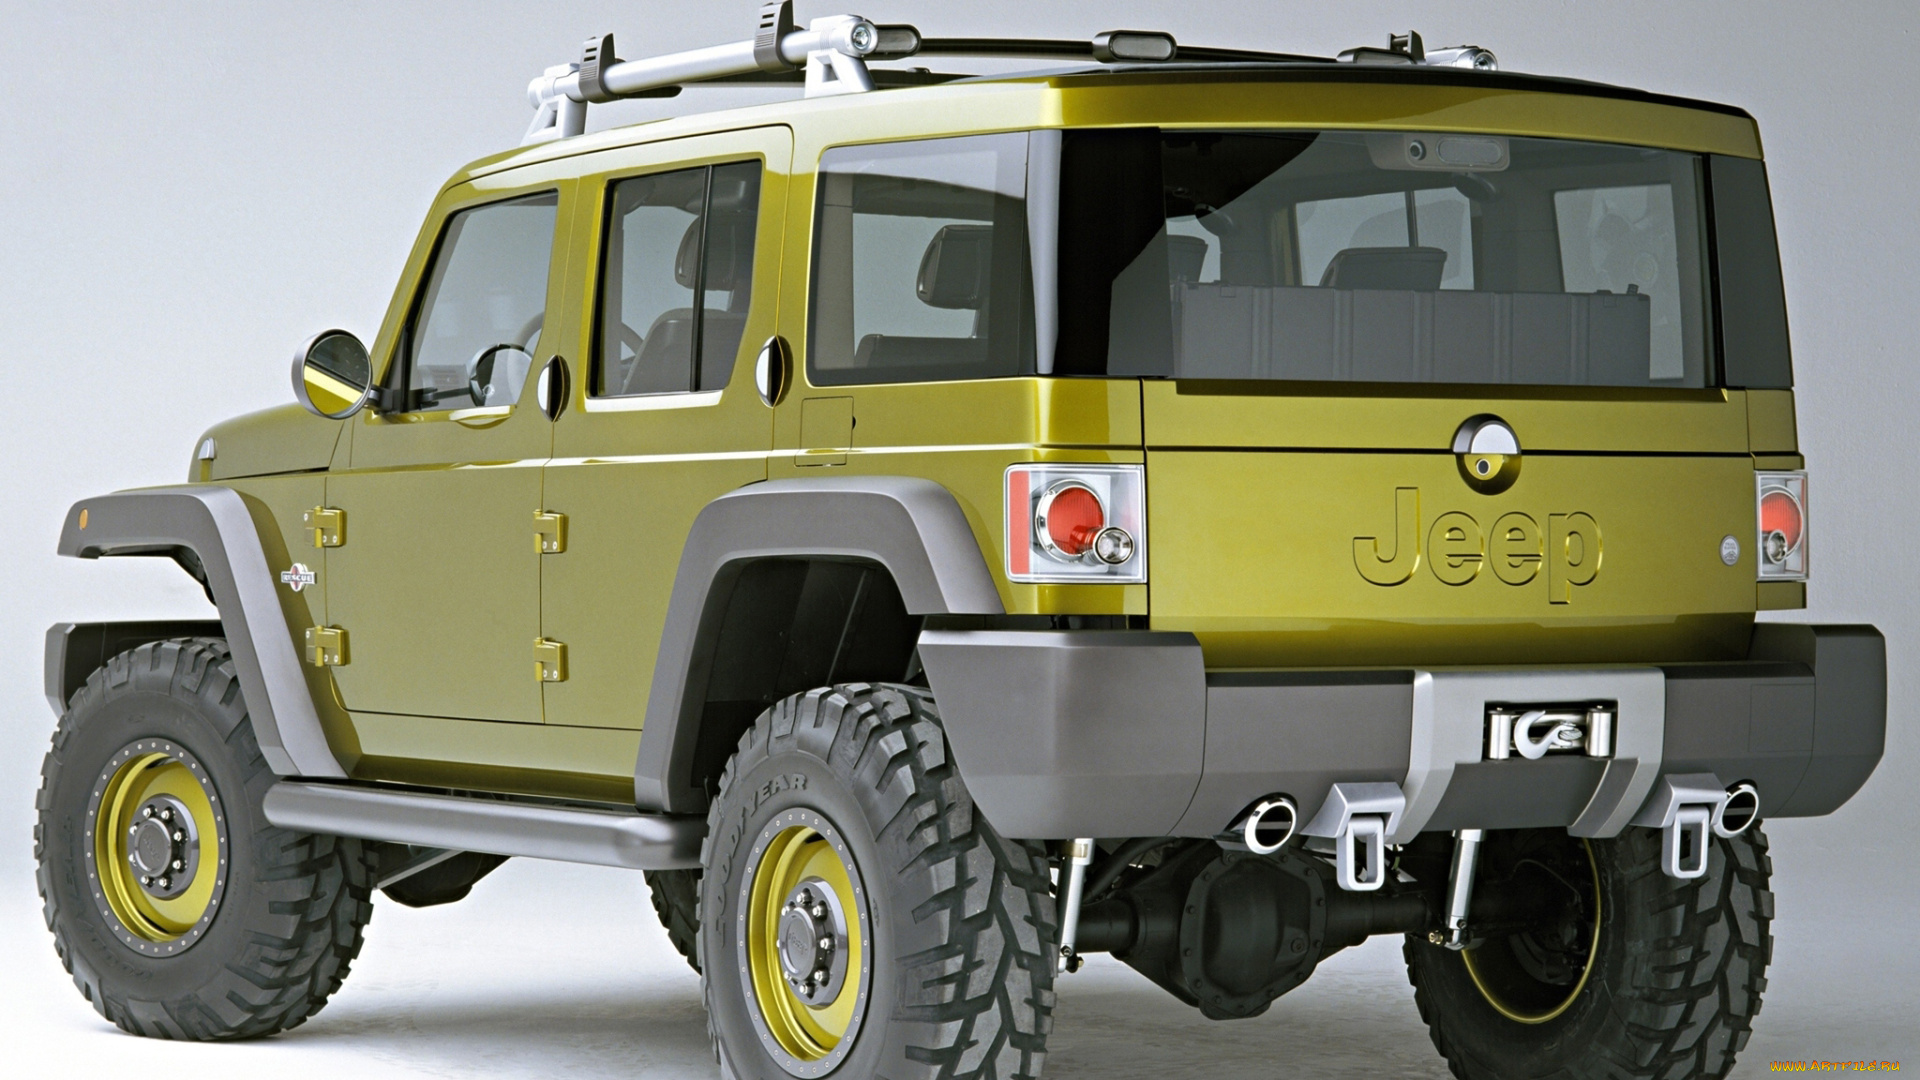 jeep, rescue, concept, 2004, автомобили, jeep, 2004, внедорожник, concept, rescue